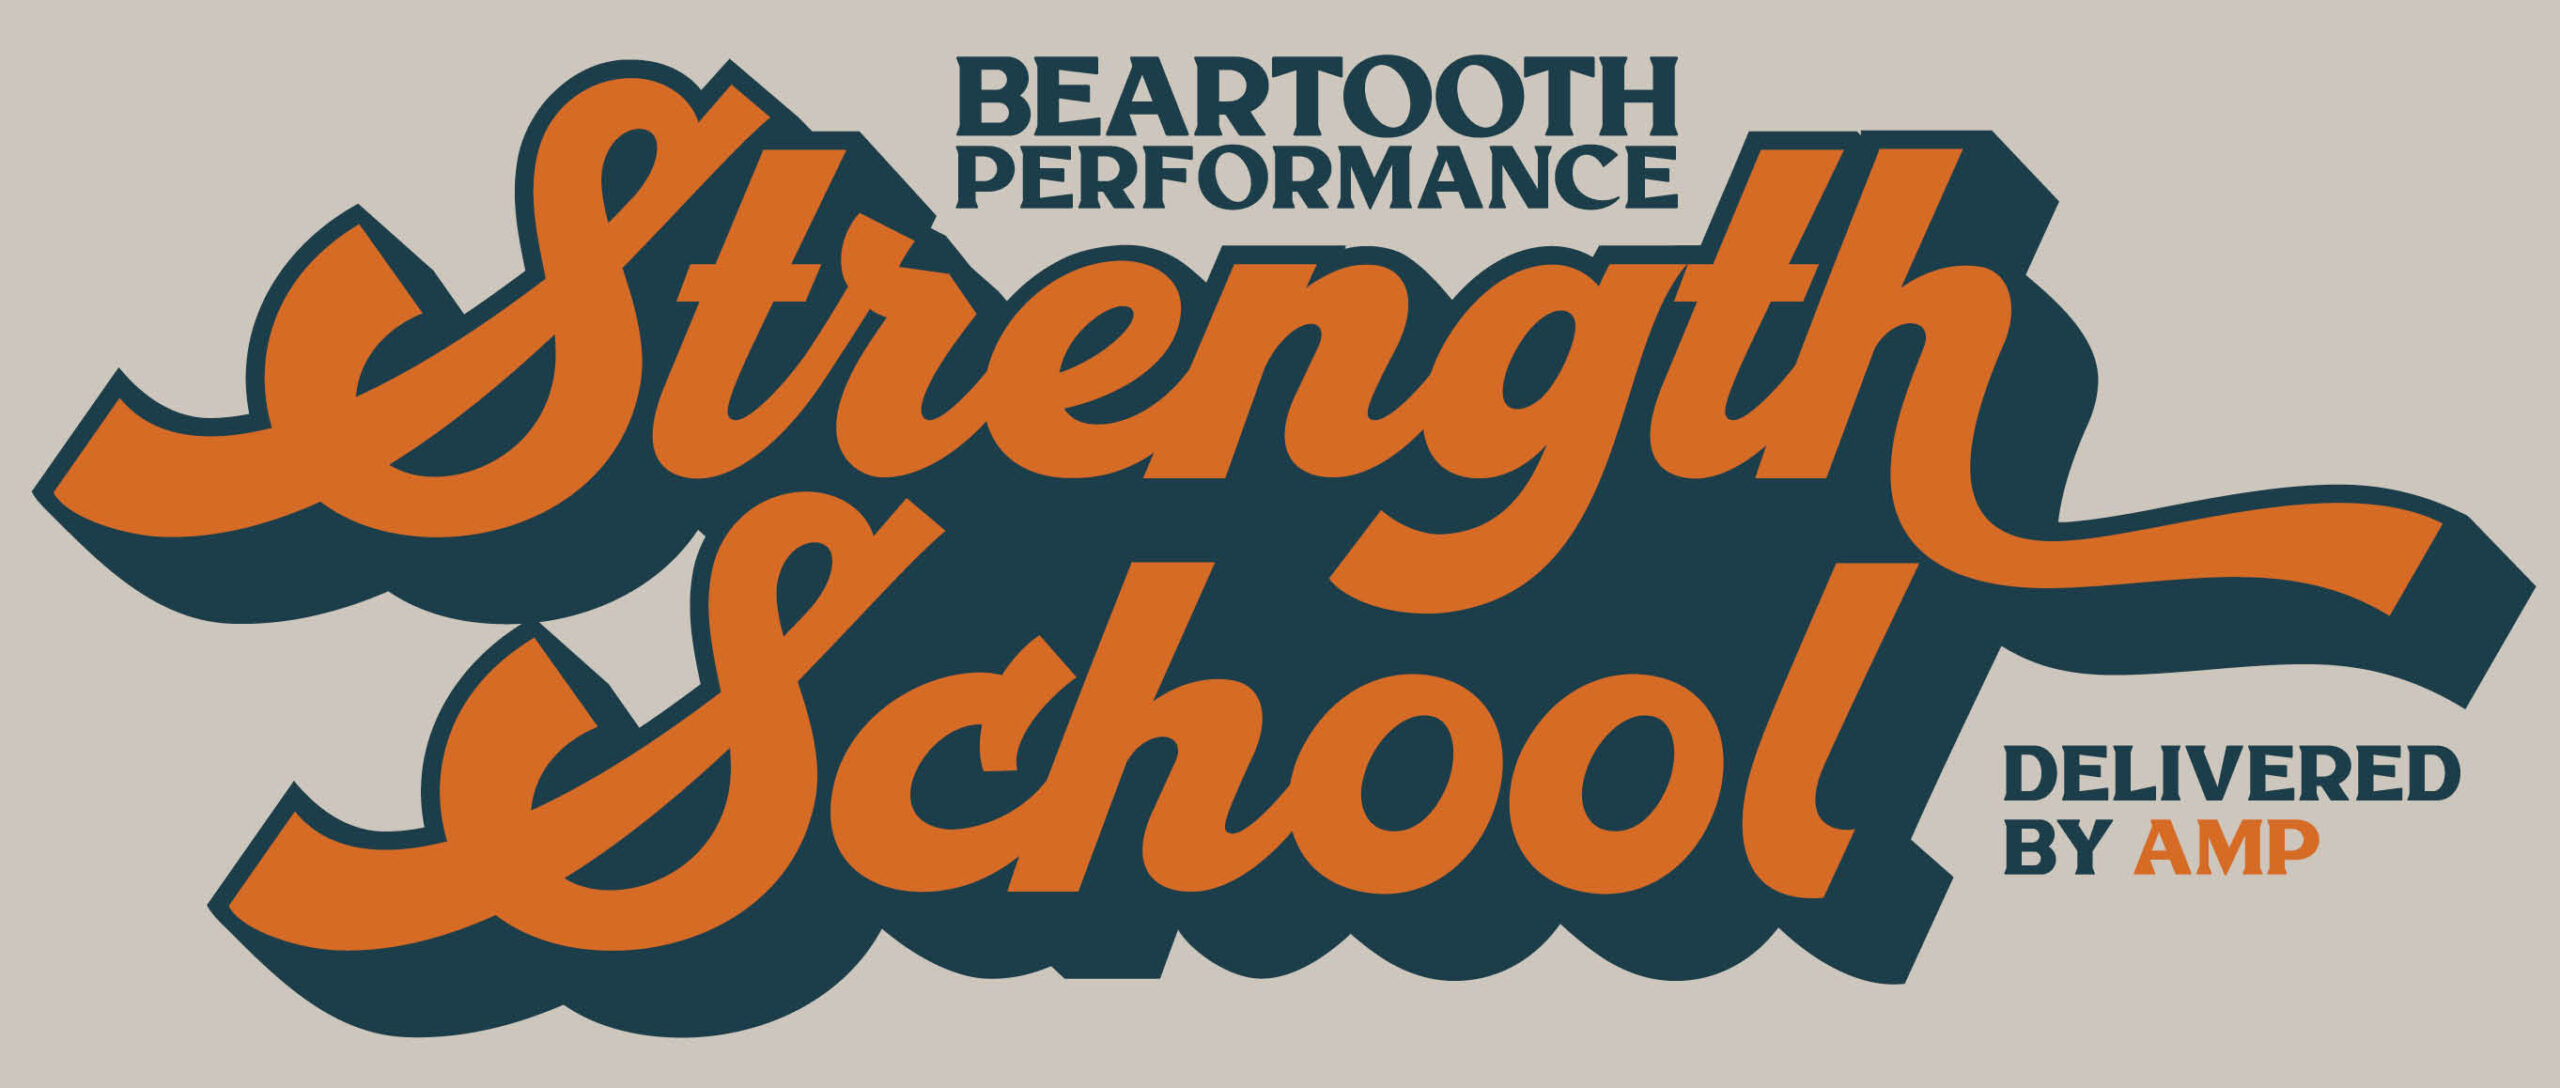 Beartooth-Performance_Strength-School_05